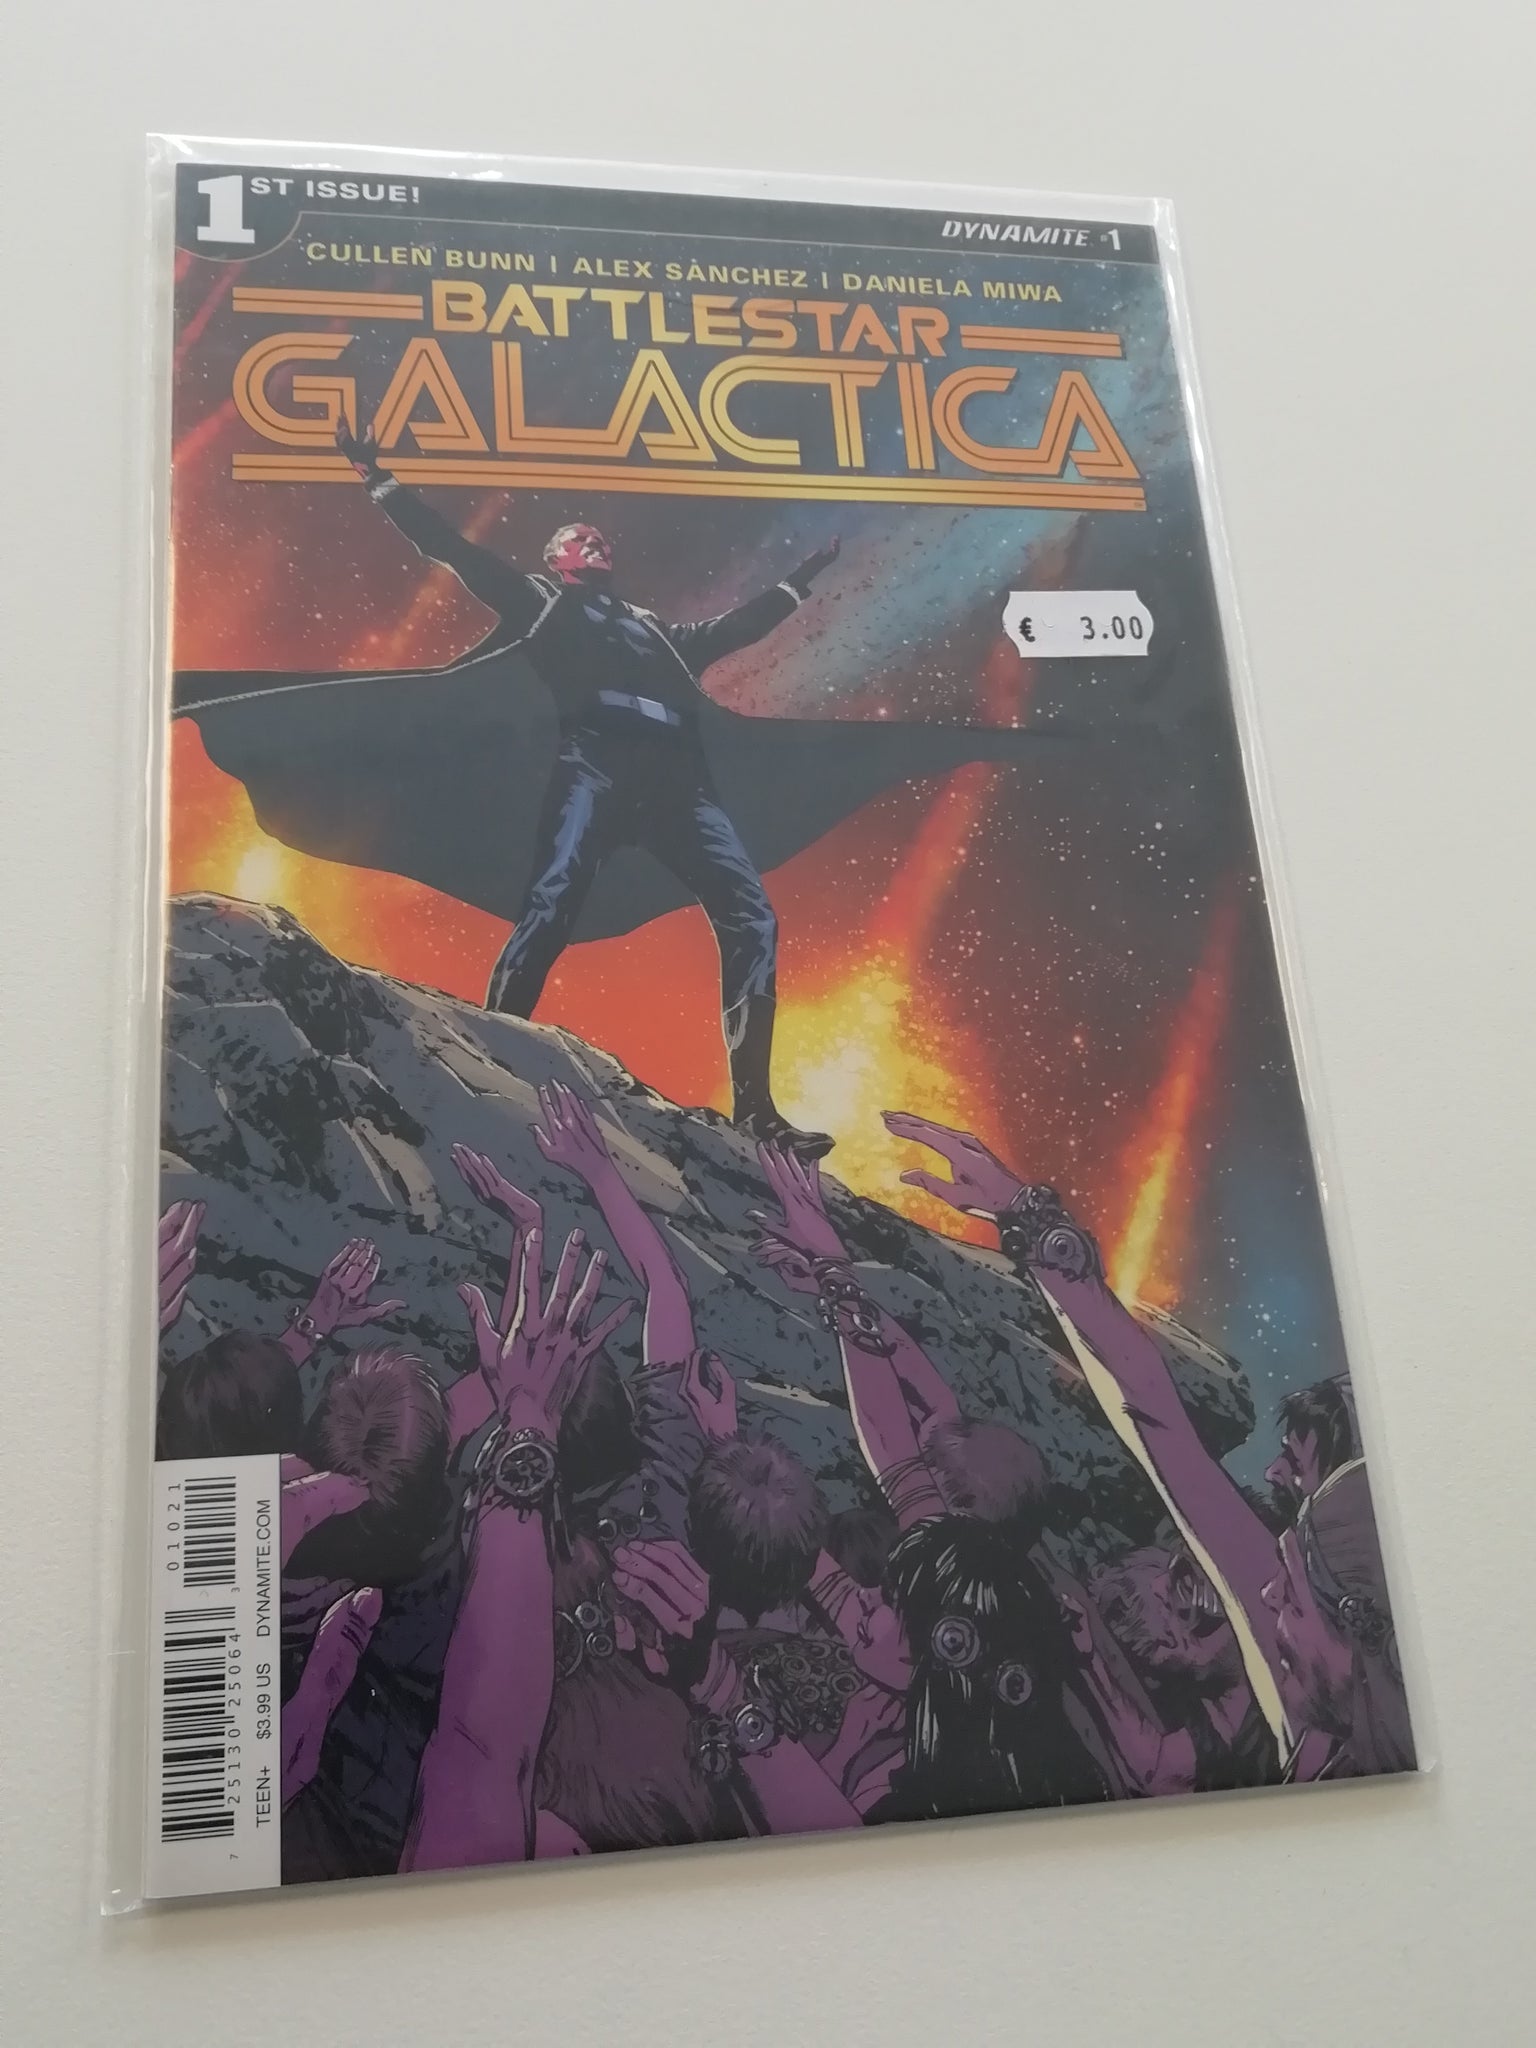 Battlestar Galactica Vol.3 #1 NM- (cover B)